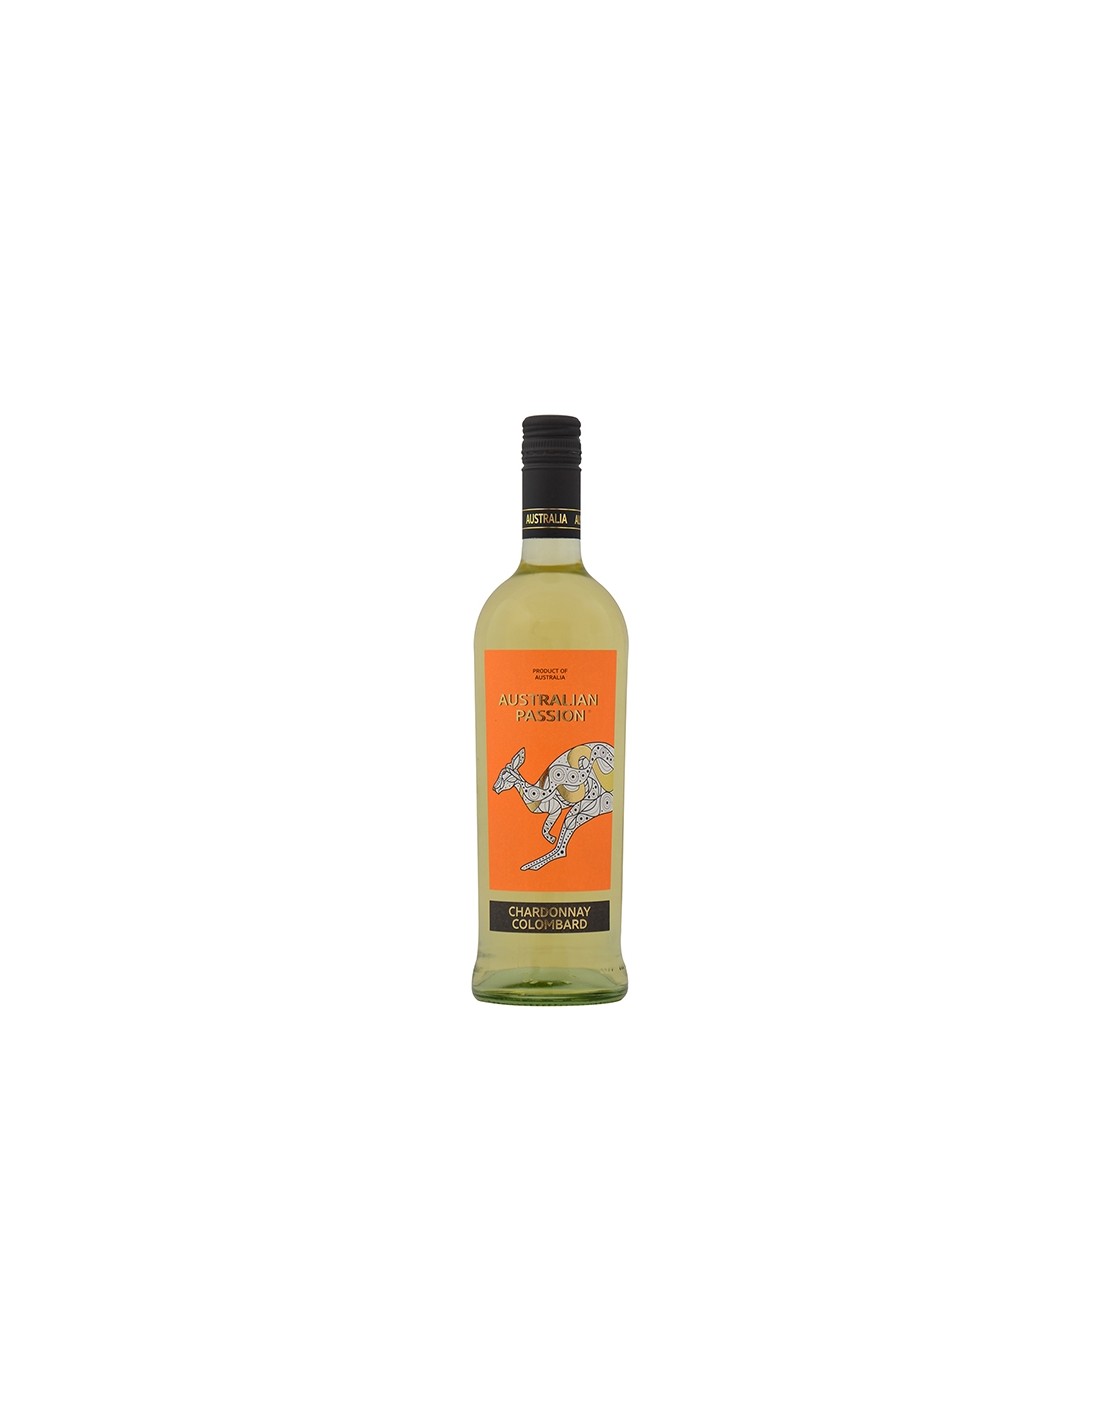 Vin alb sec, Chardonnay Colombard, Australian Passion, 0.75L, 12.5% alc., Australia alcooldiscount.ro